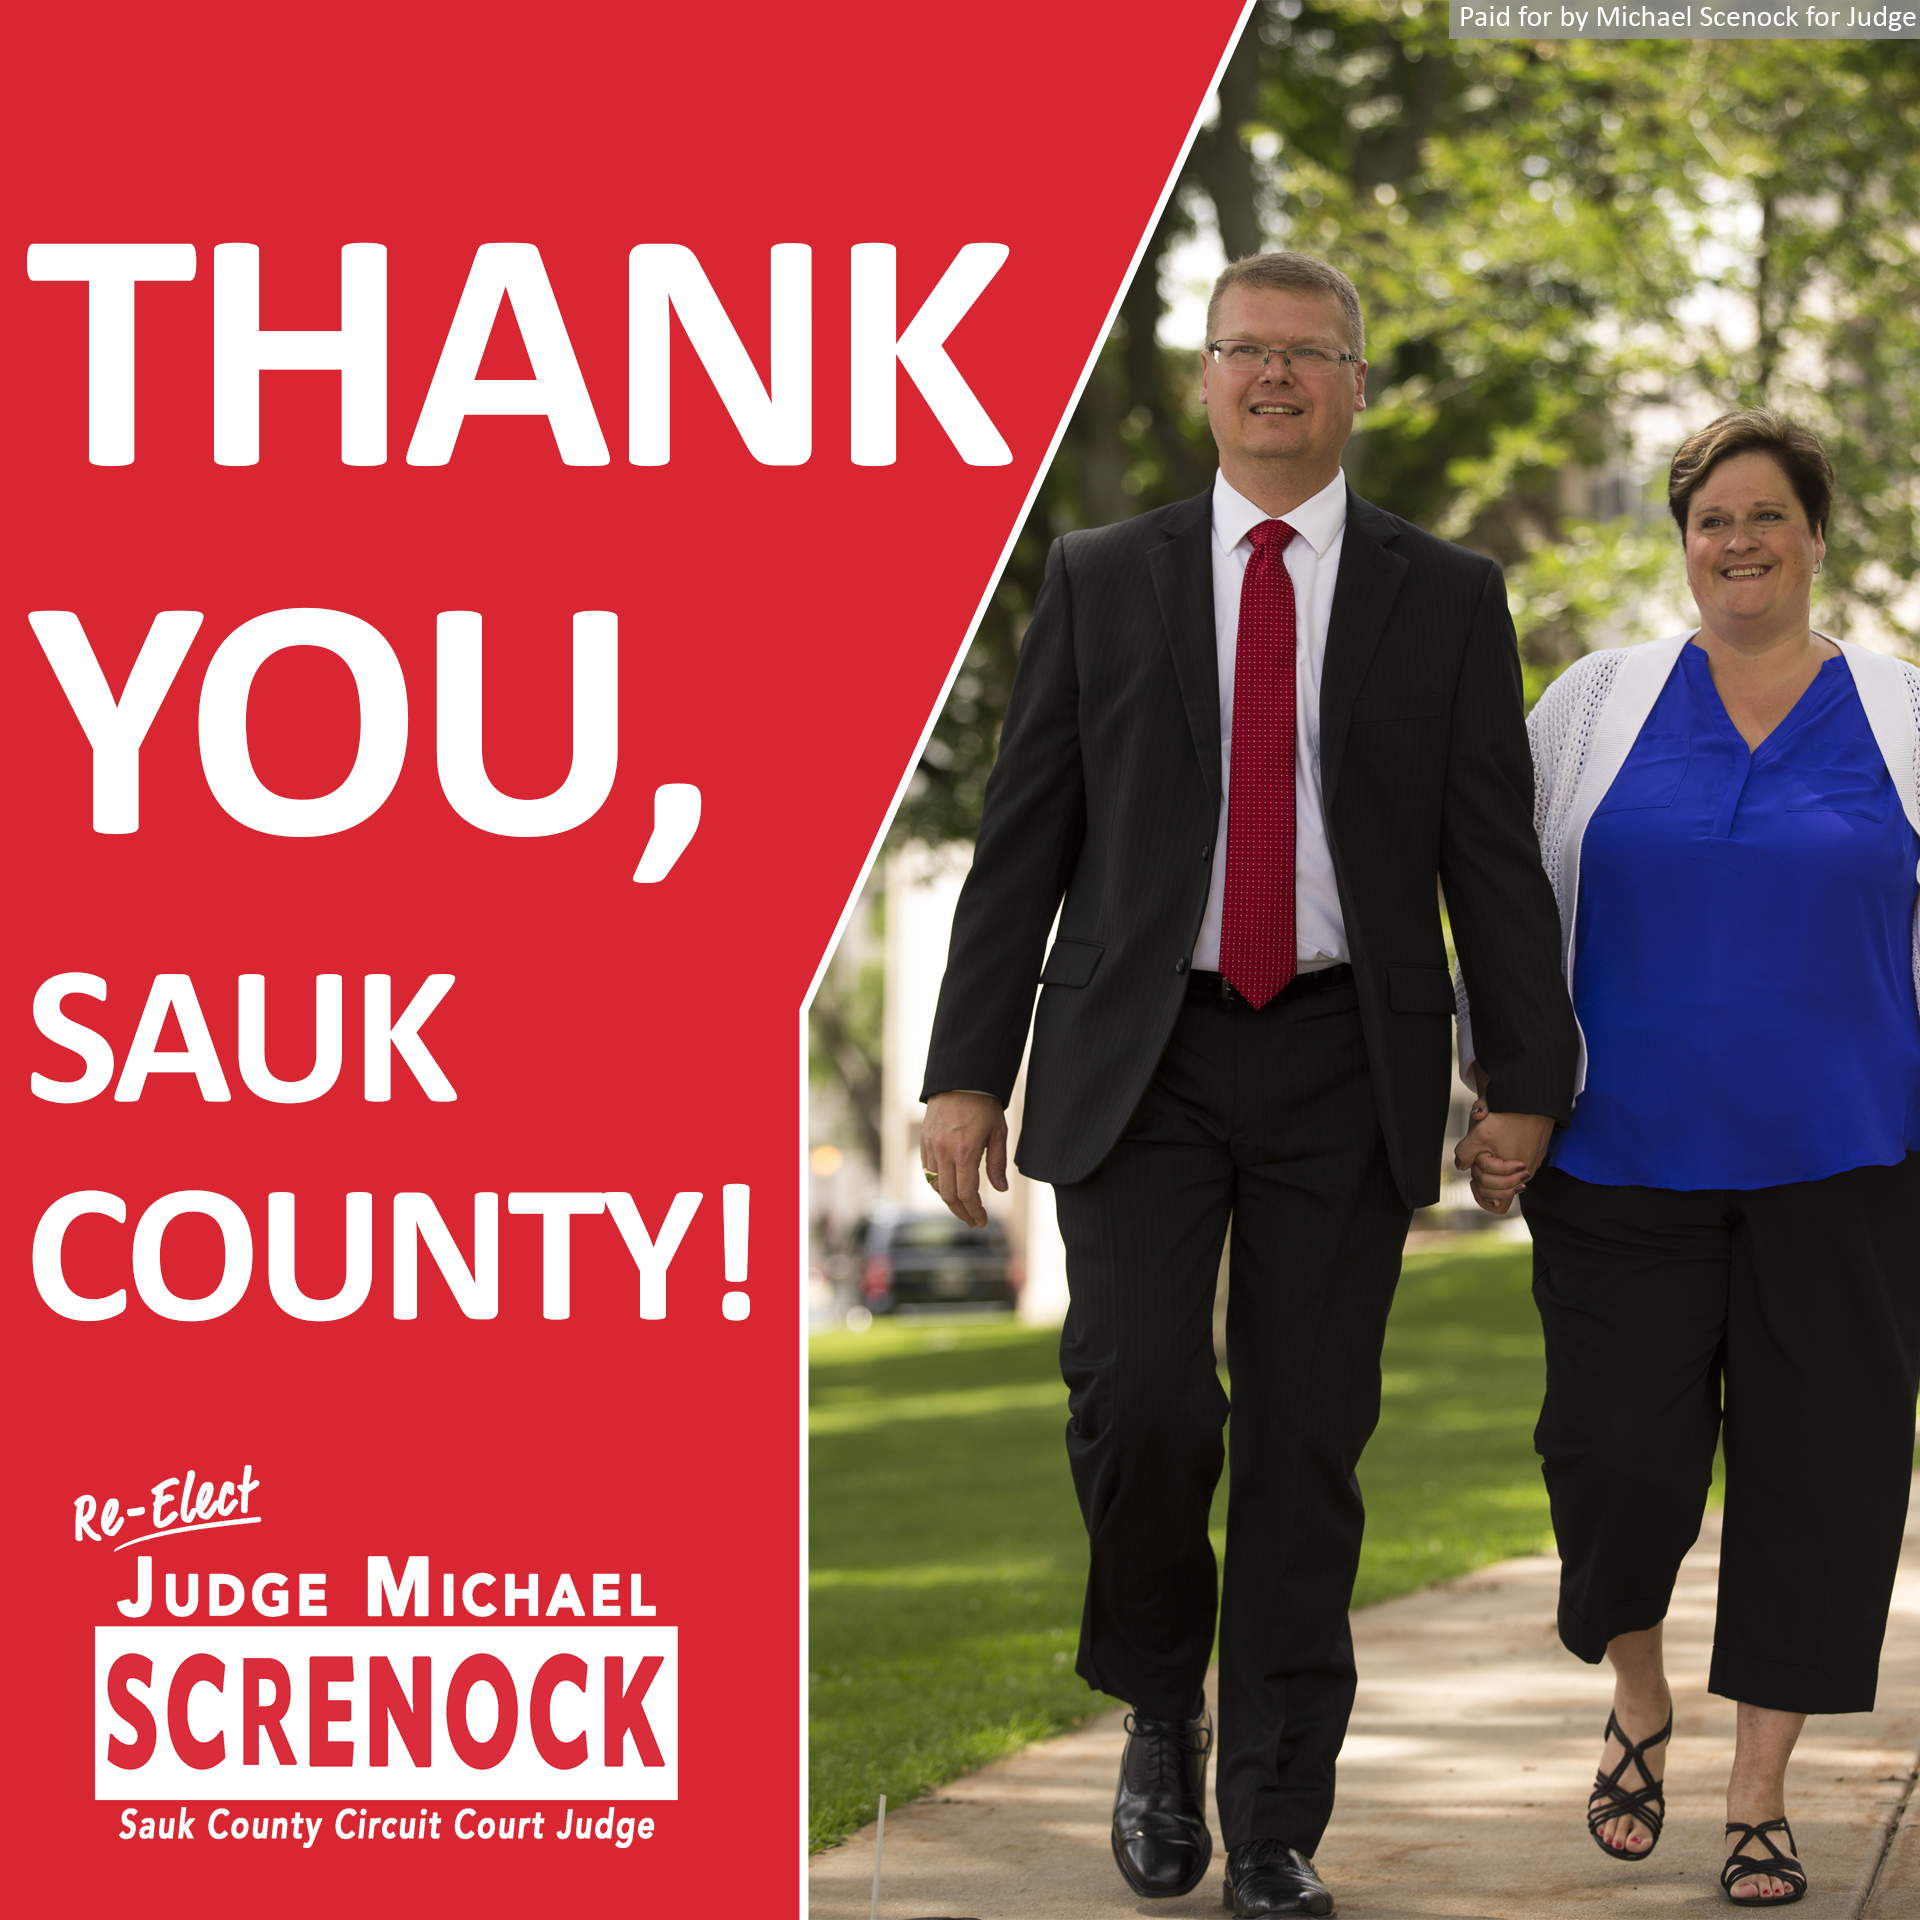 Thank you, Sauk County